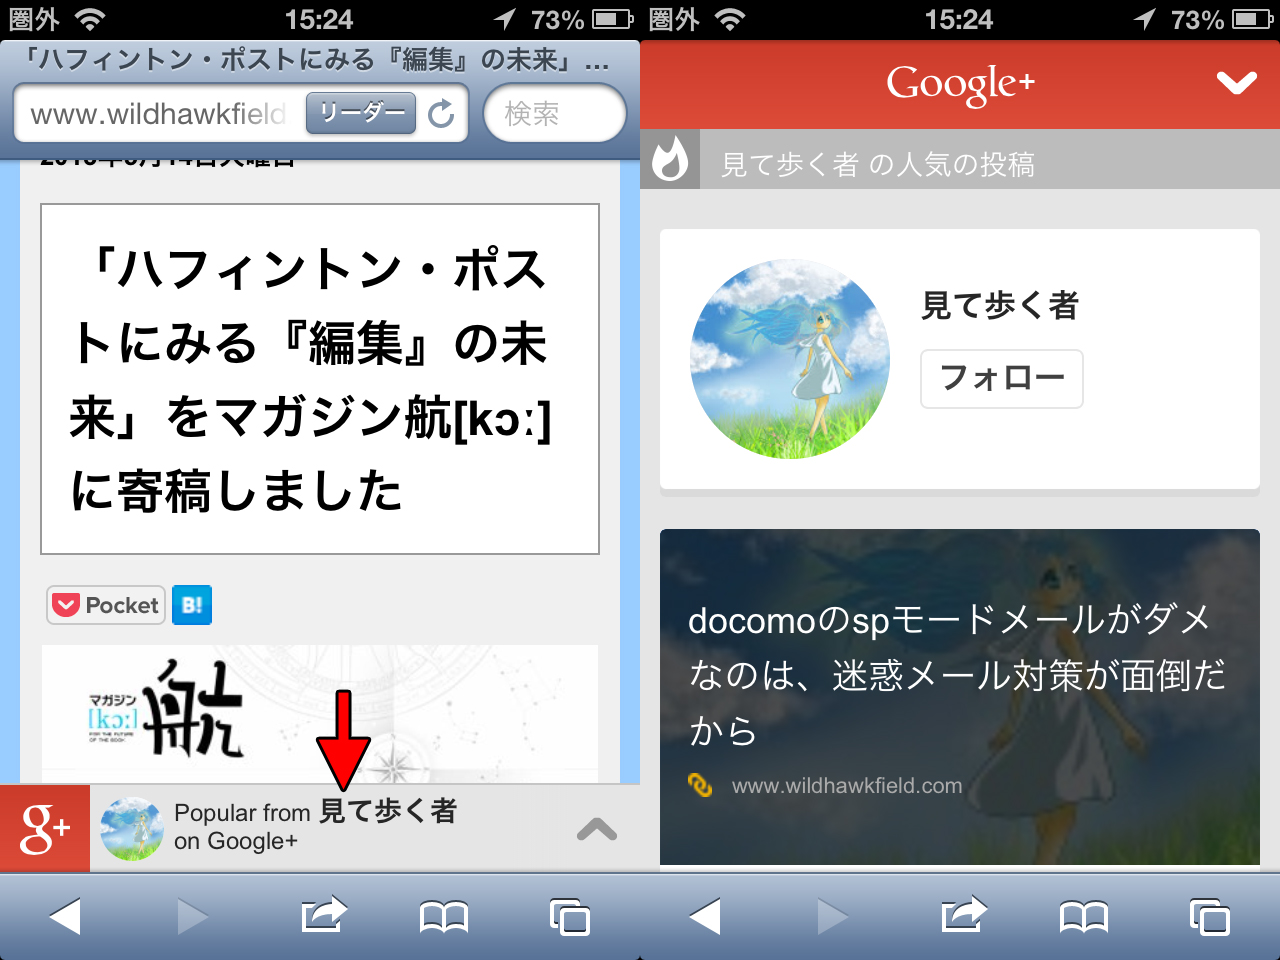 Popular from 見て歩く者 on Google+